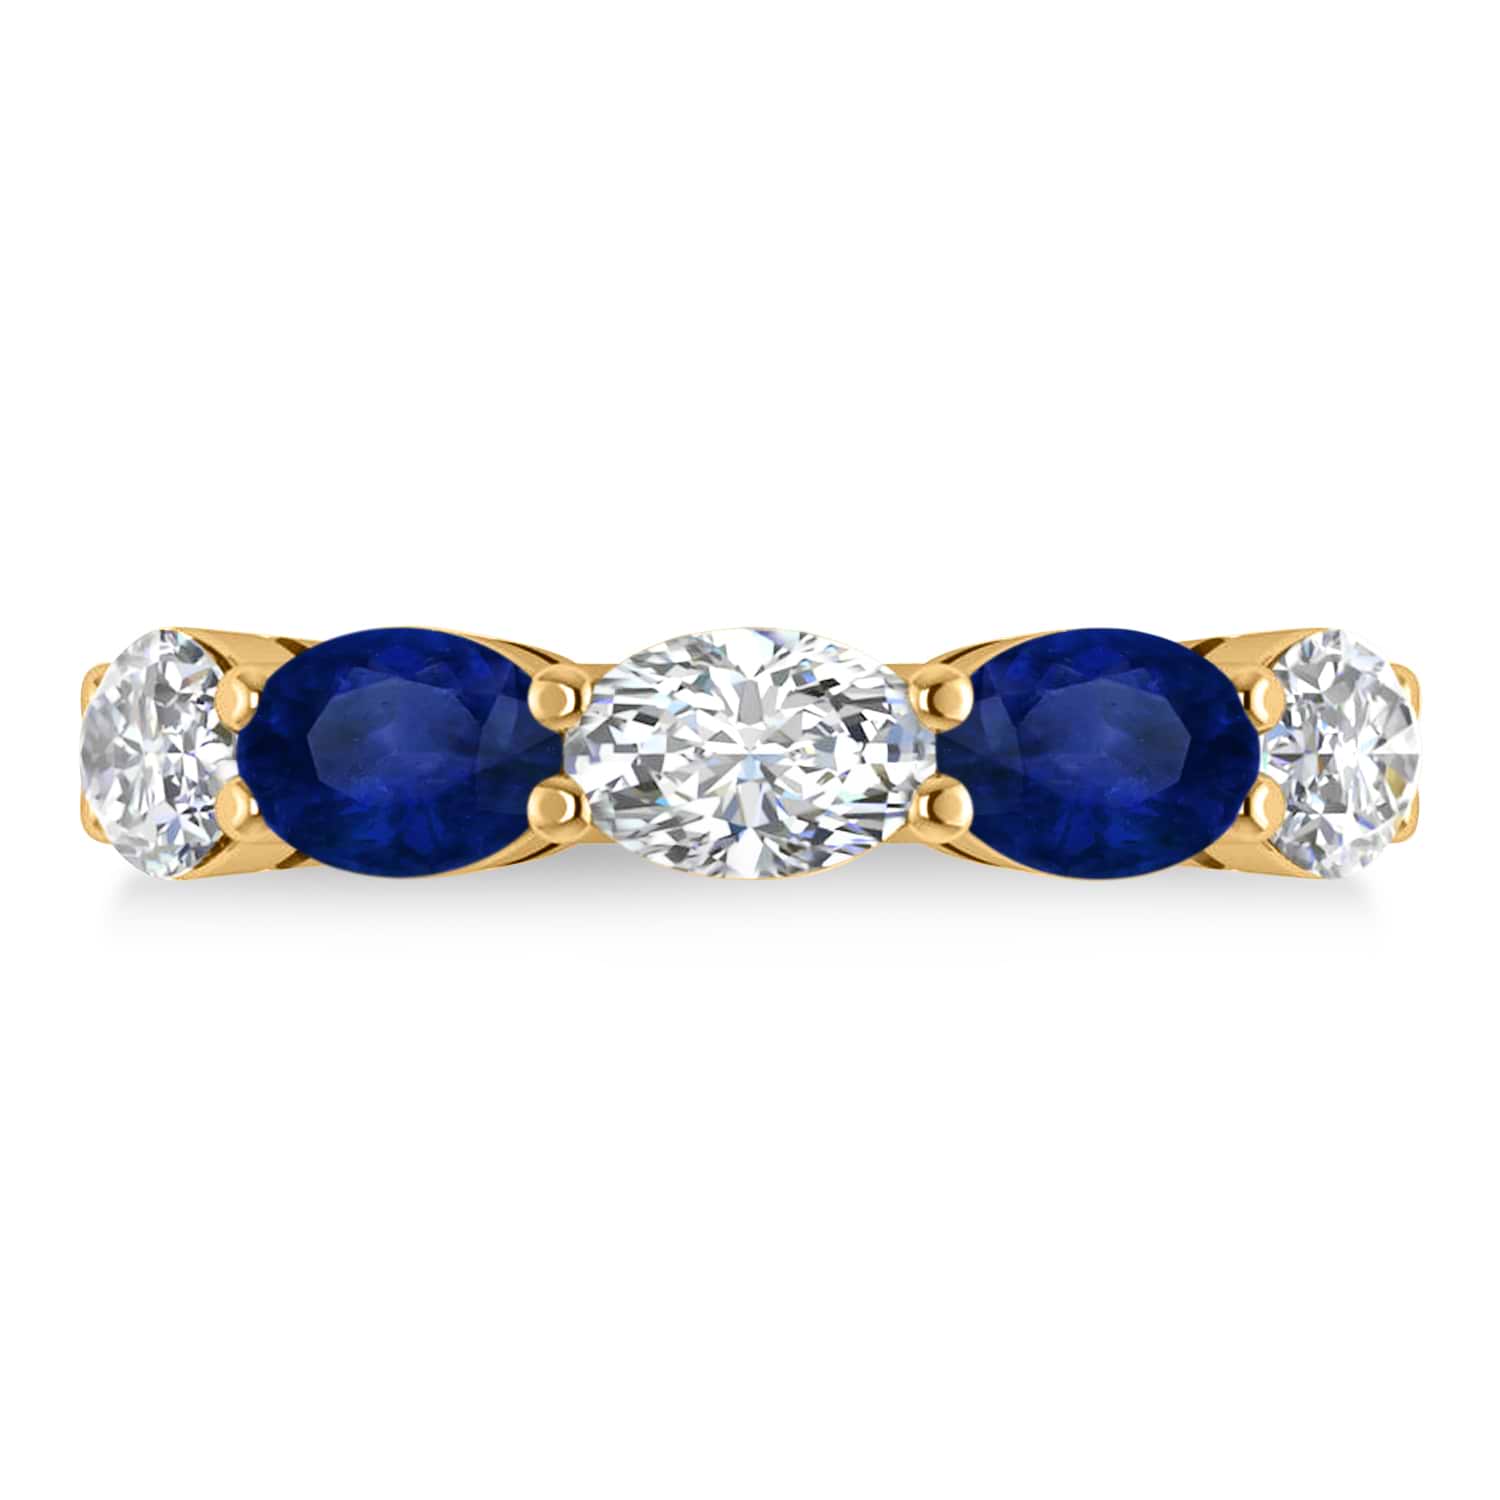 Oval Diamond & Blue Sapphire Five Stone Ring 14k Yellow Gold (5.00ct)